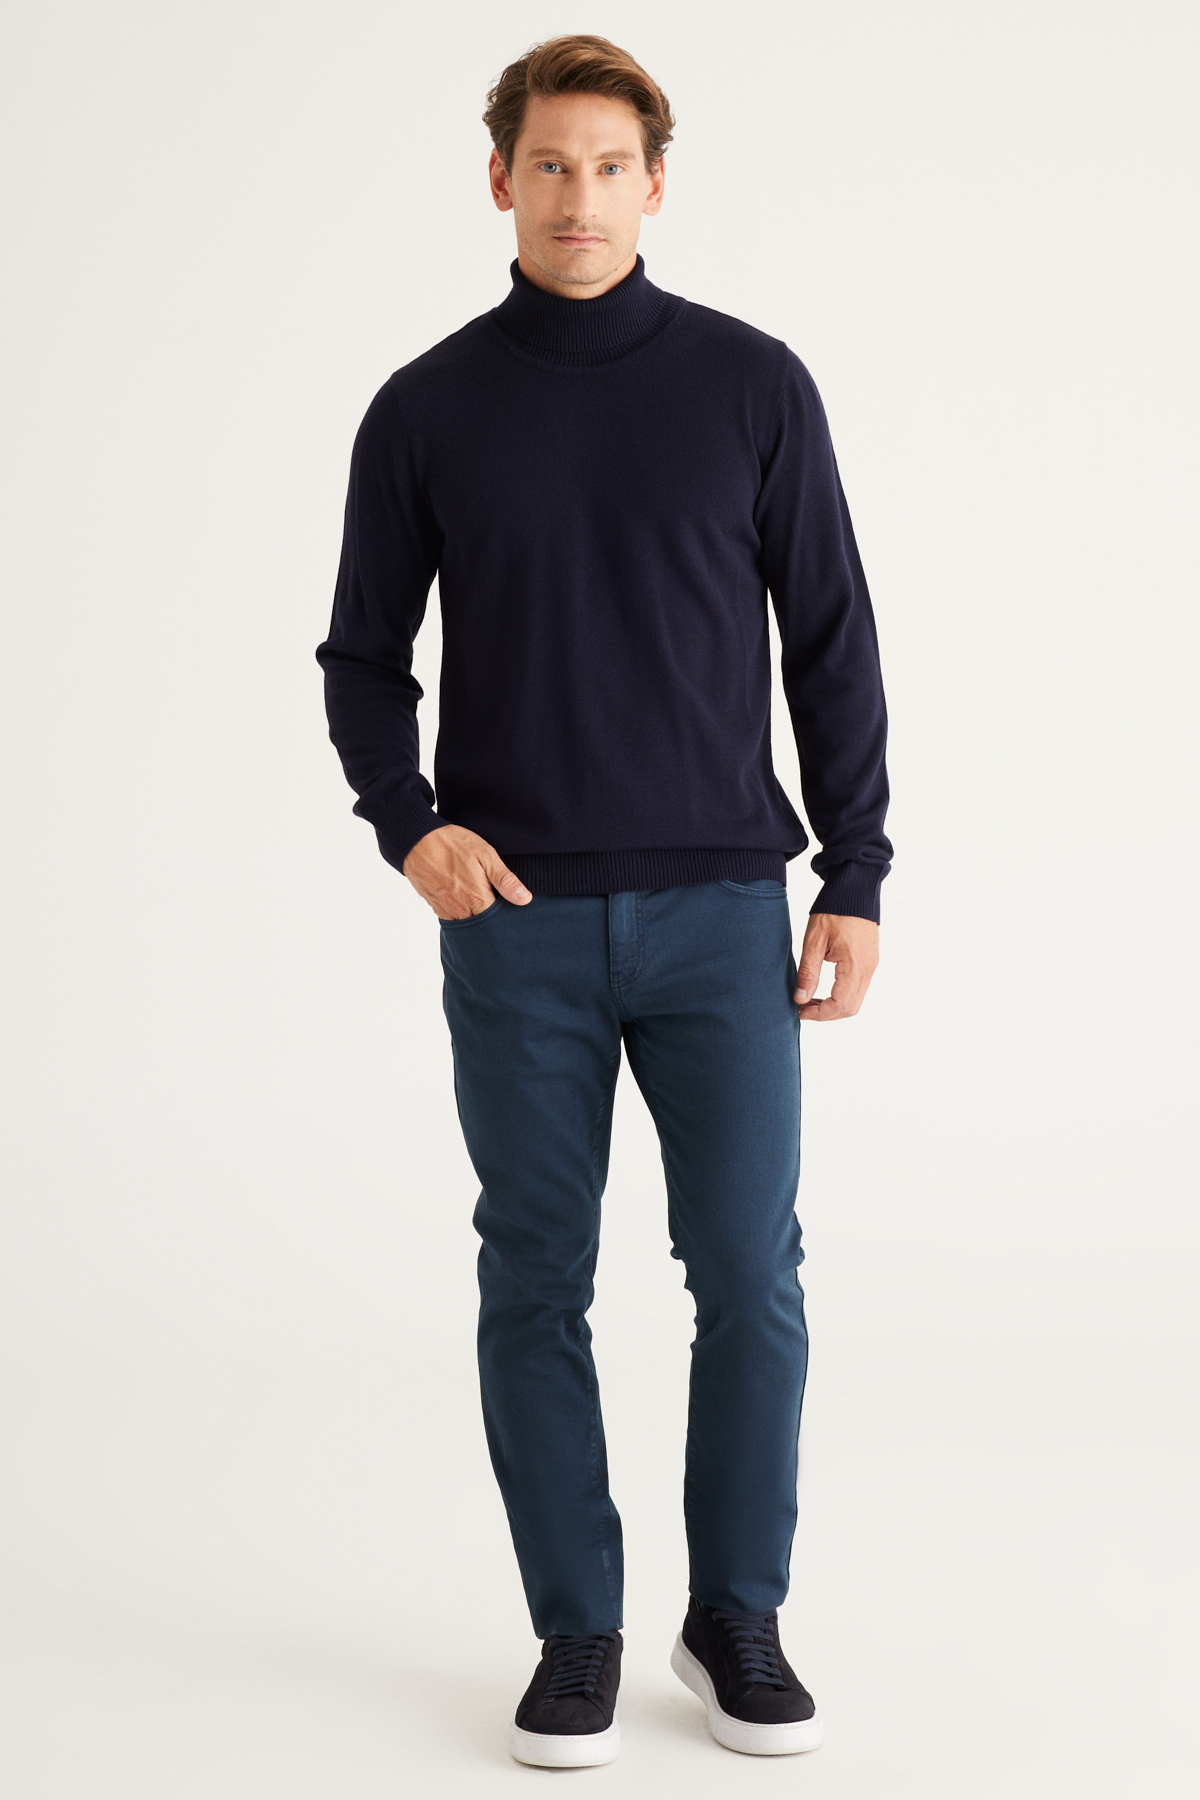 Levně ALTINYILDIZ CLASSICS Men's Navy Blue Anti-Pilling, Anti-Pilling Feature Standard Fit Full Turtleneck Knitwear Sweater.